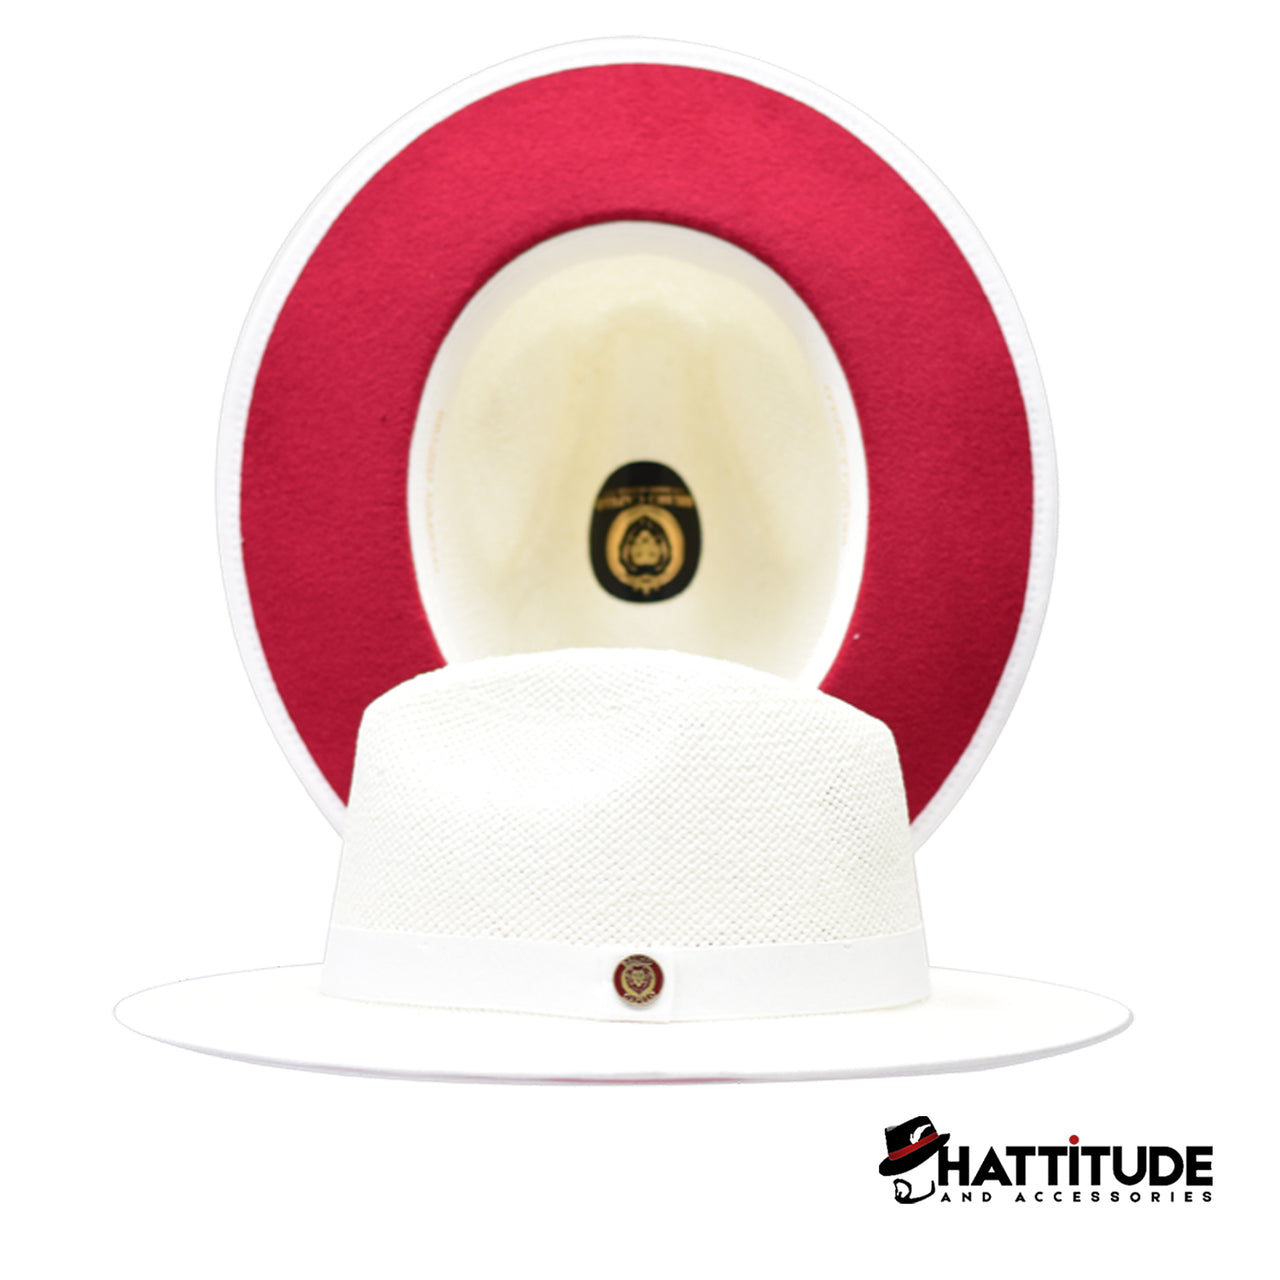 Kingdom Collection White/Red - Hattitude